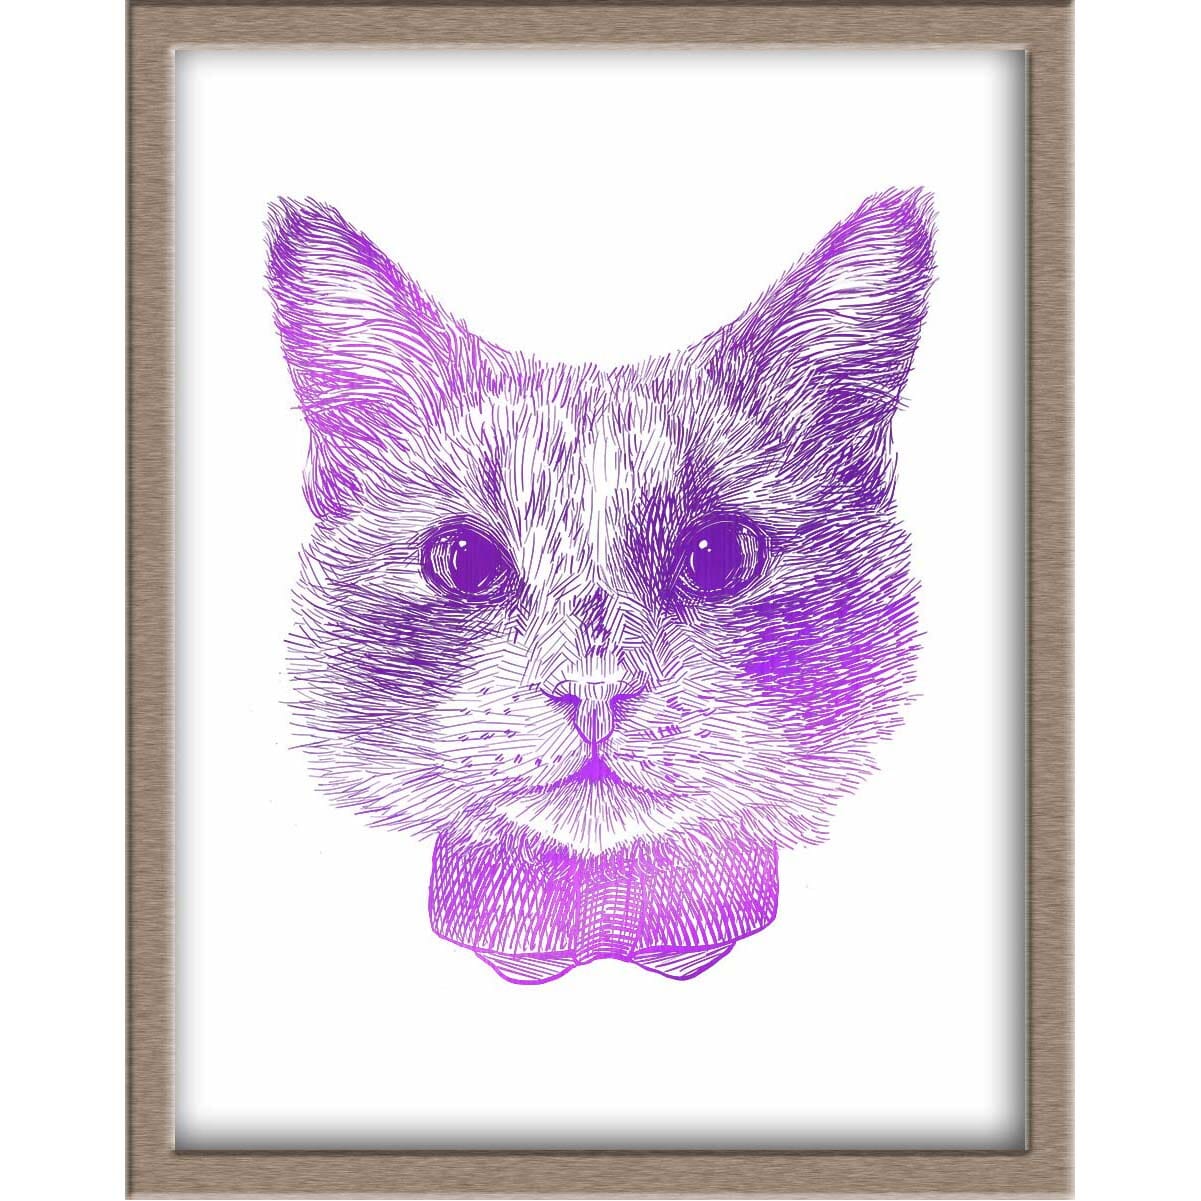 Sweet Cat Foiled Print (Bear) Posters, Prints, & Visual Artwork JoyousJoyfulJoyness 